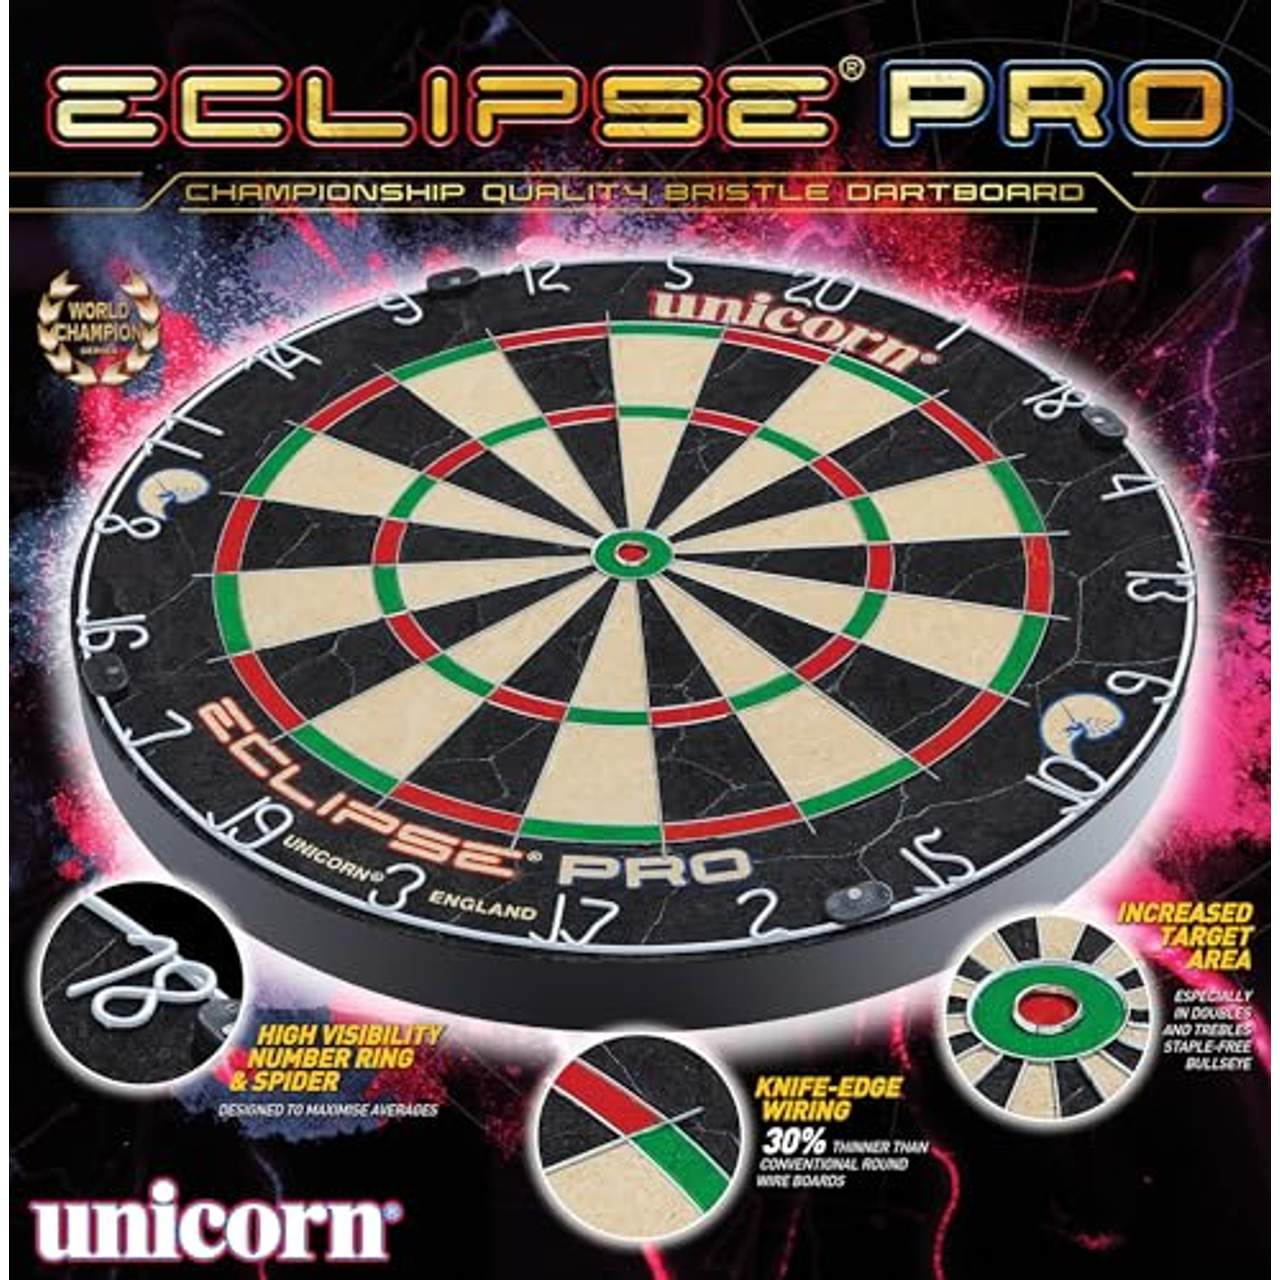 Unicorn Eclipse Pro